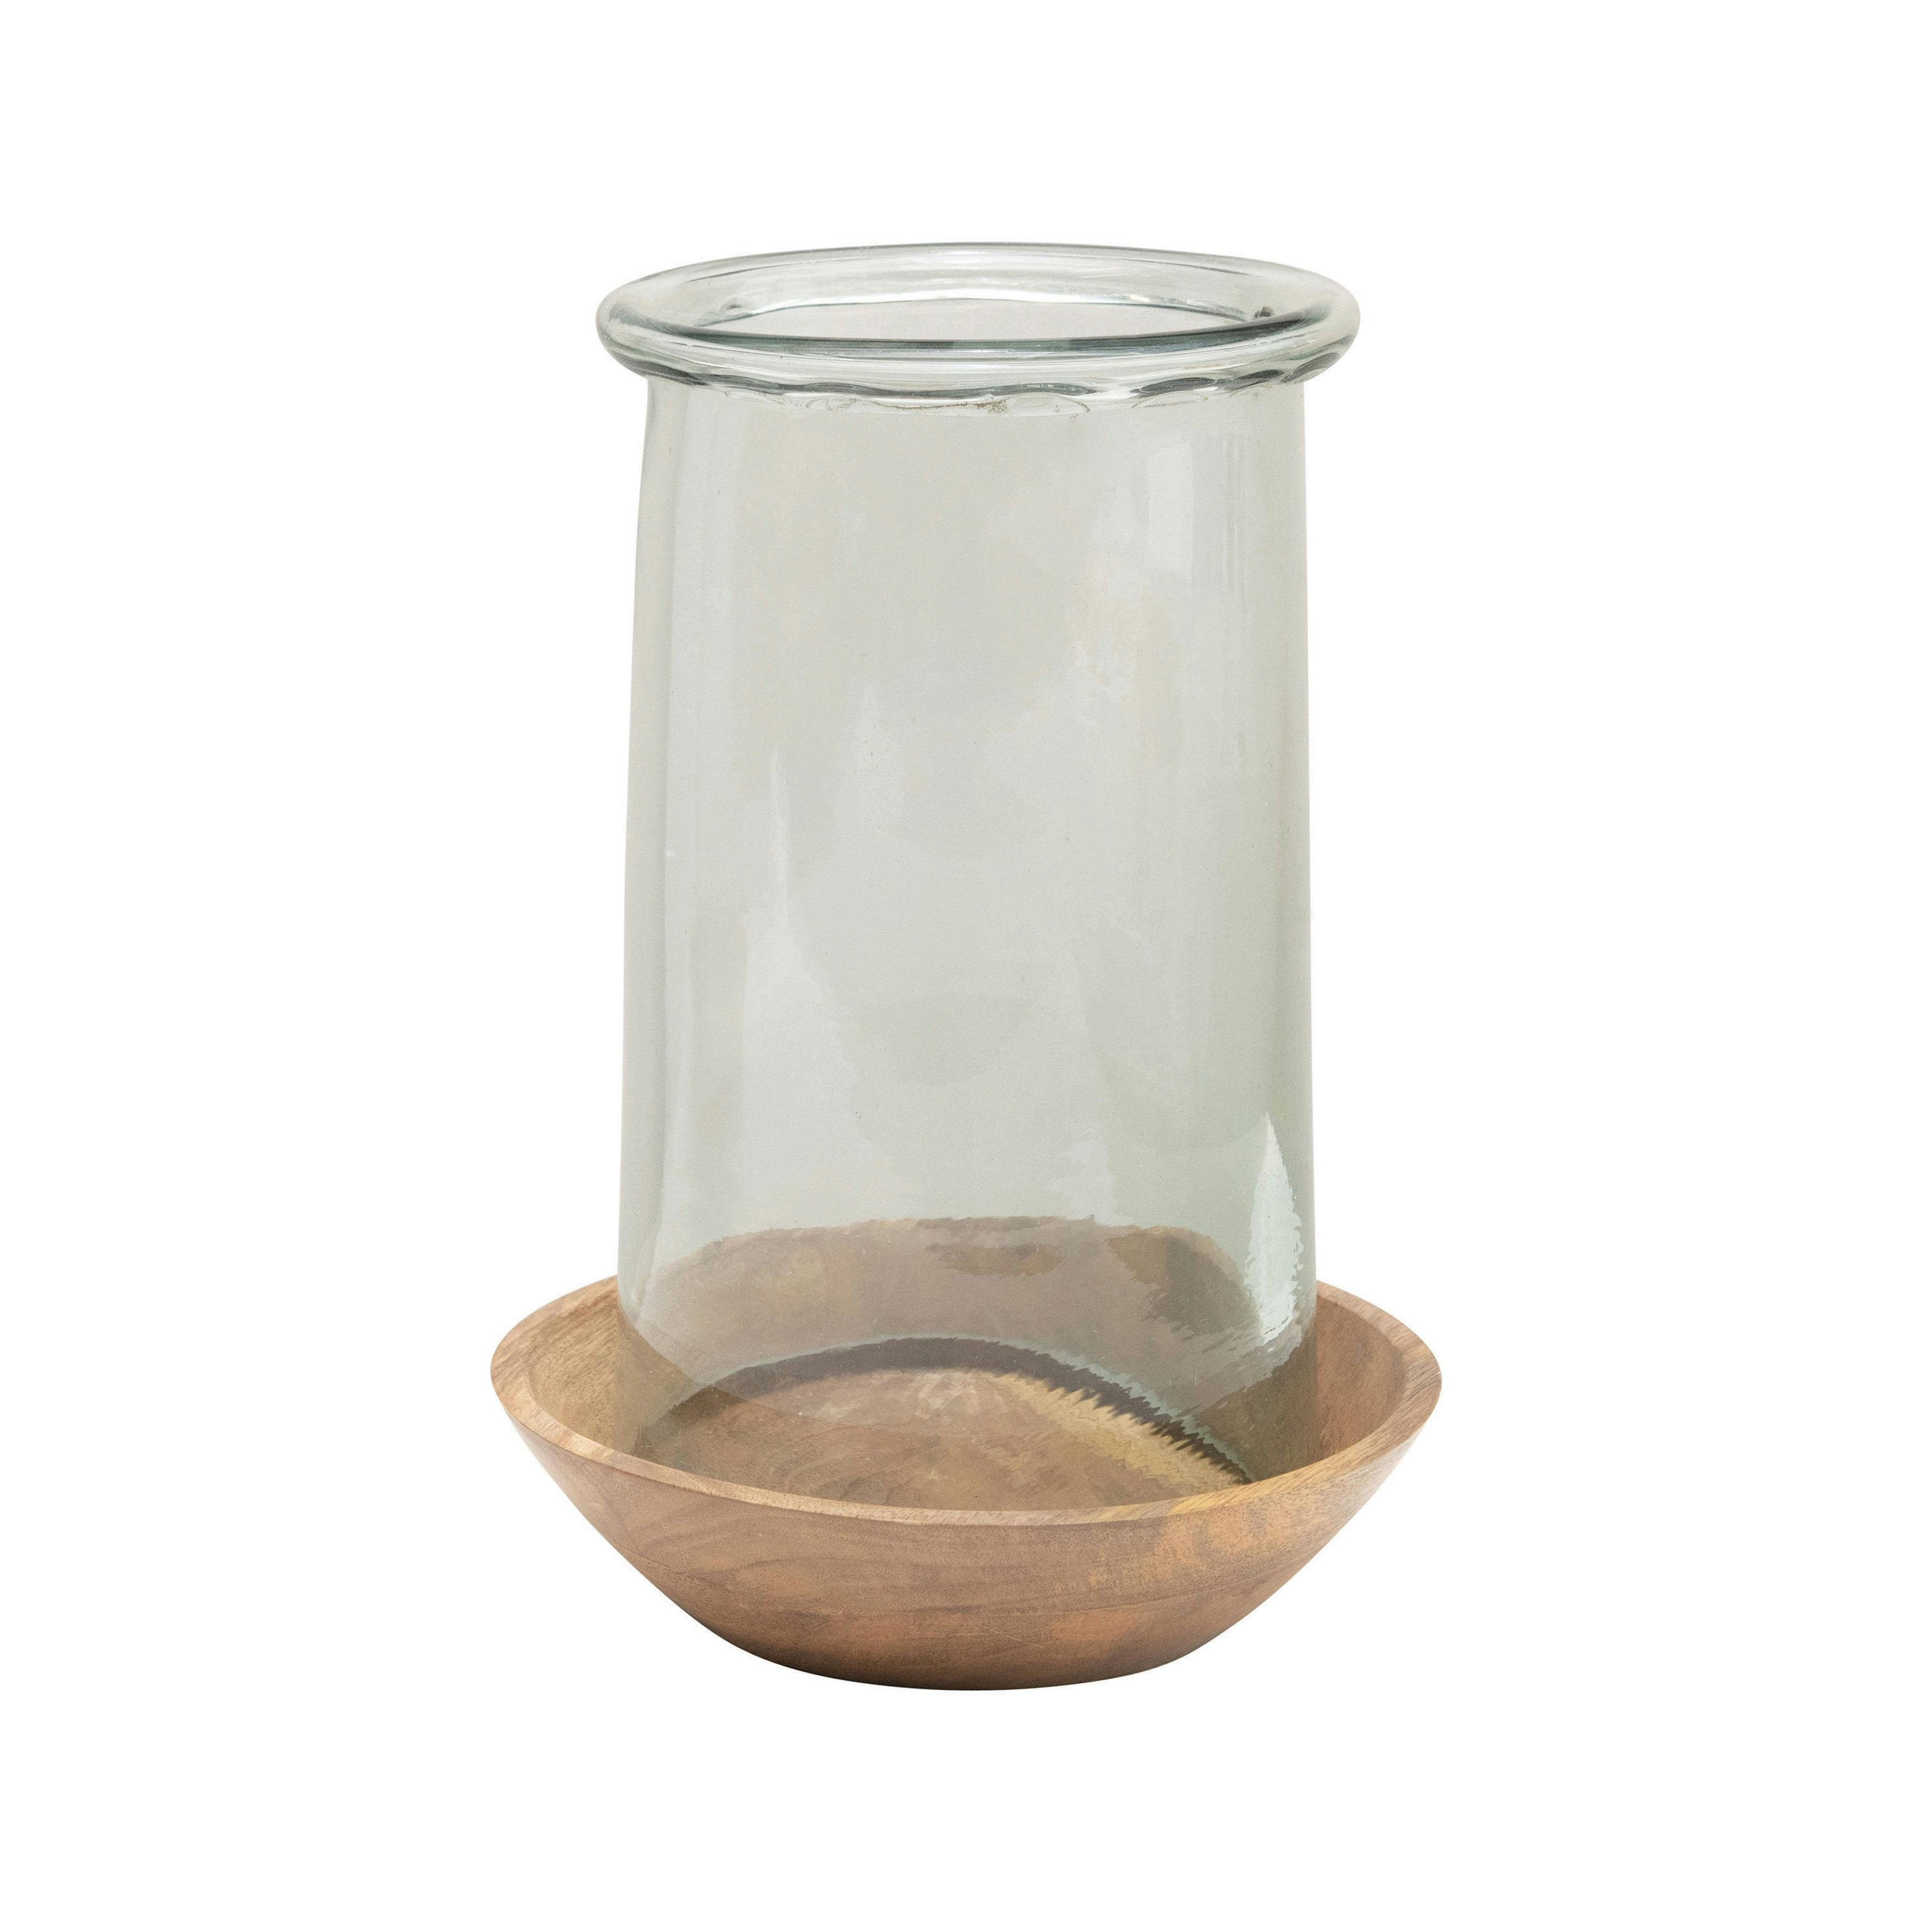 Rustic Charm 9x13 Clear Glass & Natural Wood Hurricane Vase